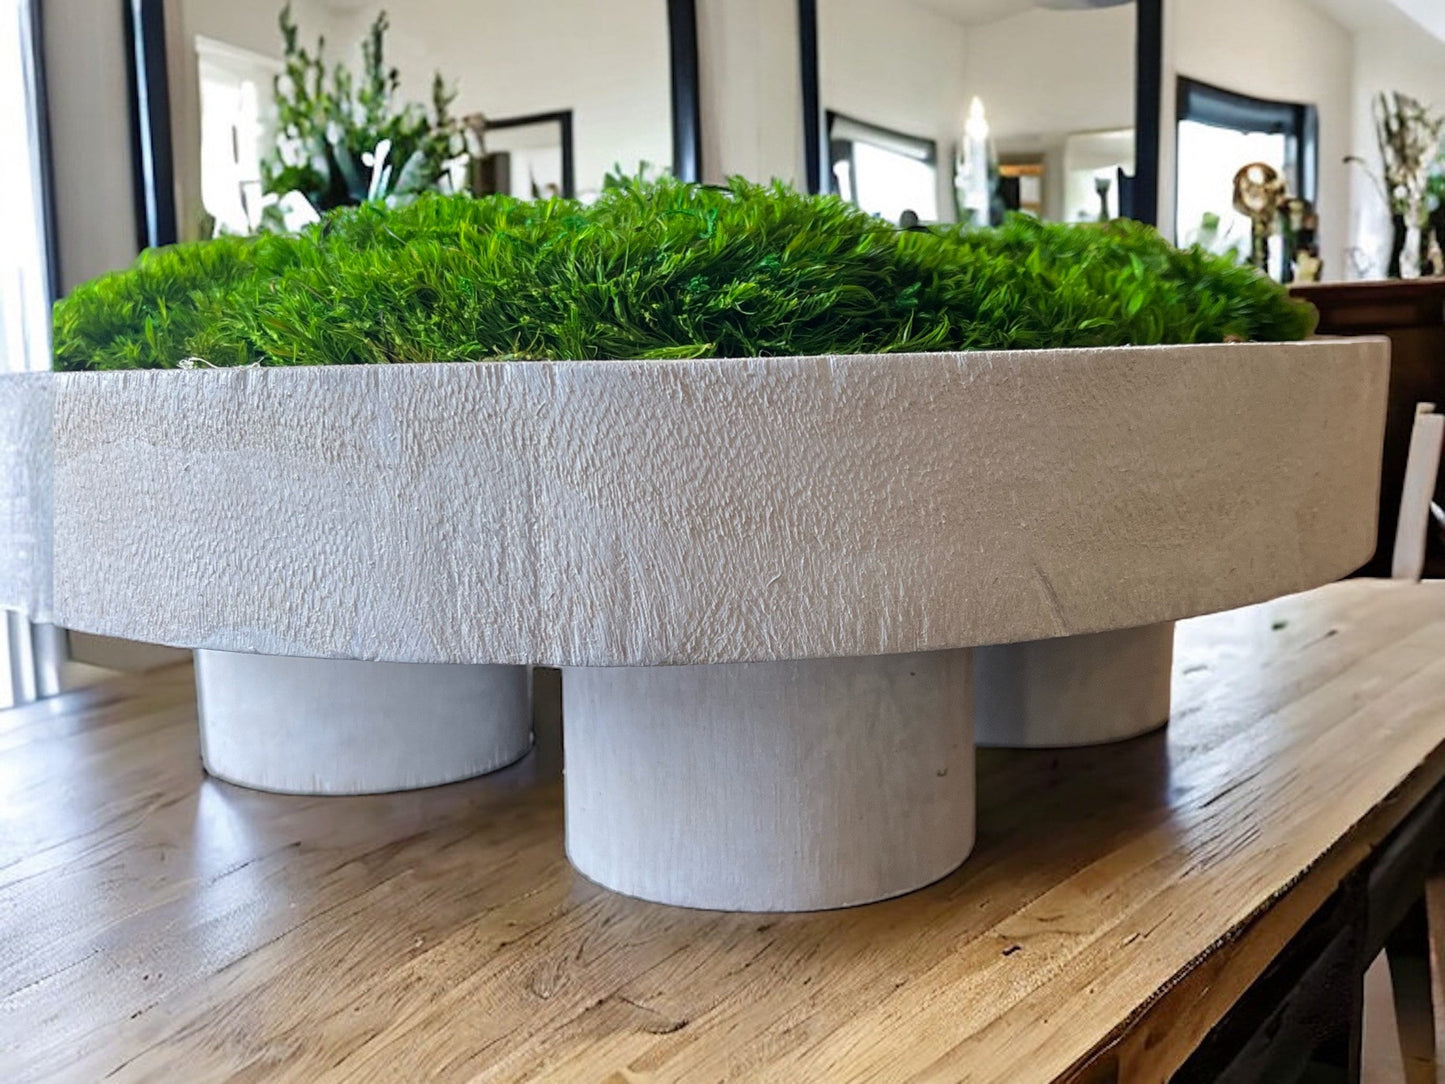 12" Round White Pedestal Moss Bowl